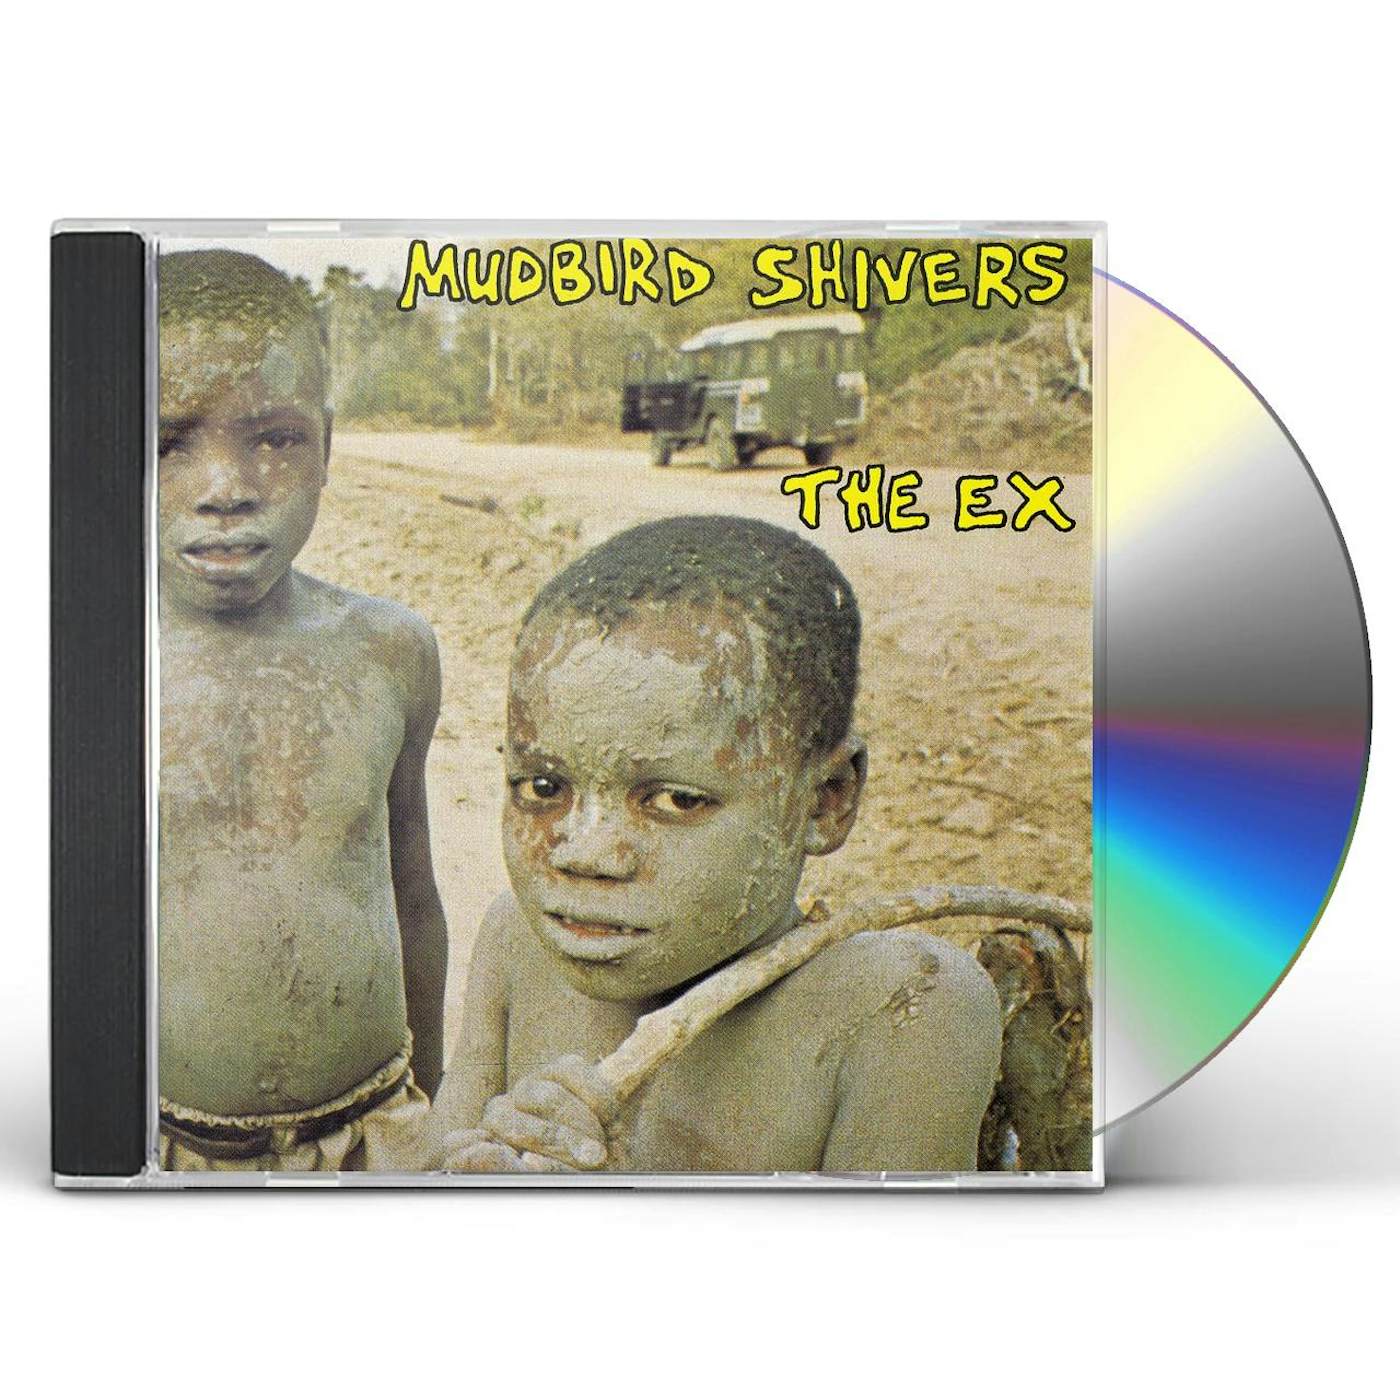 Ex MUDBIRD SHIVERS CD